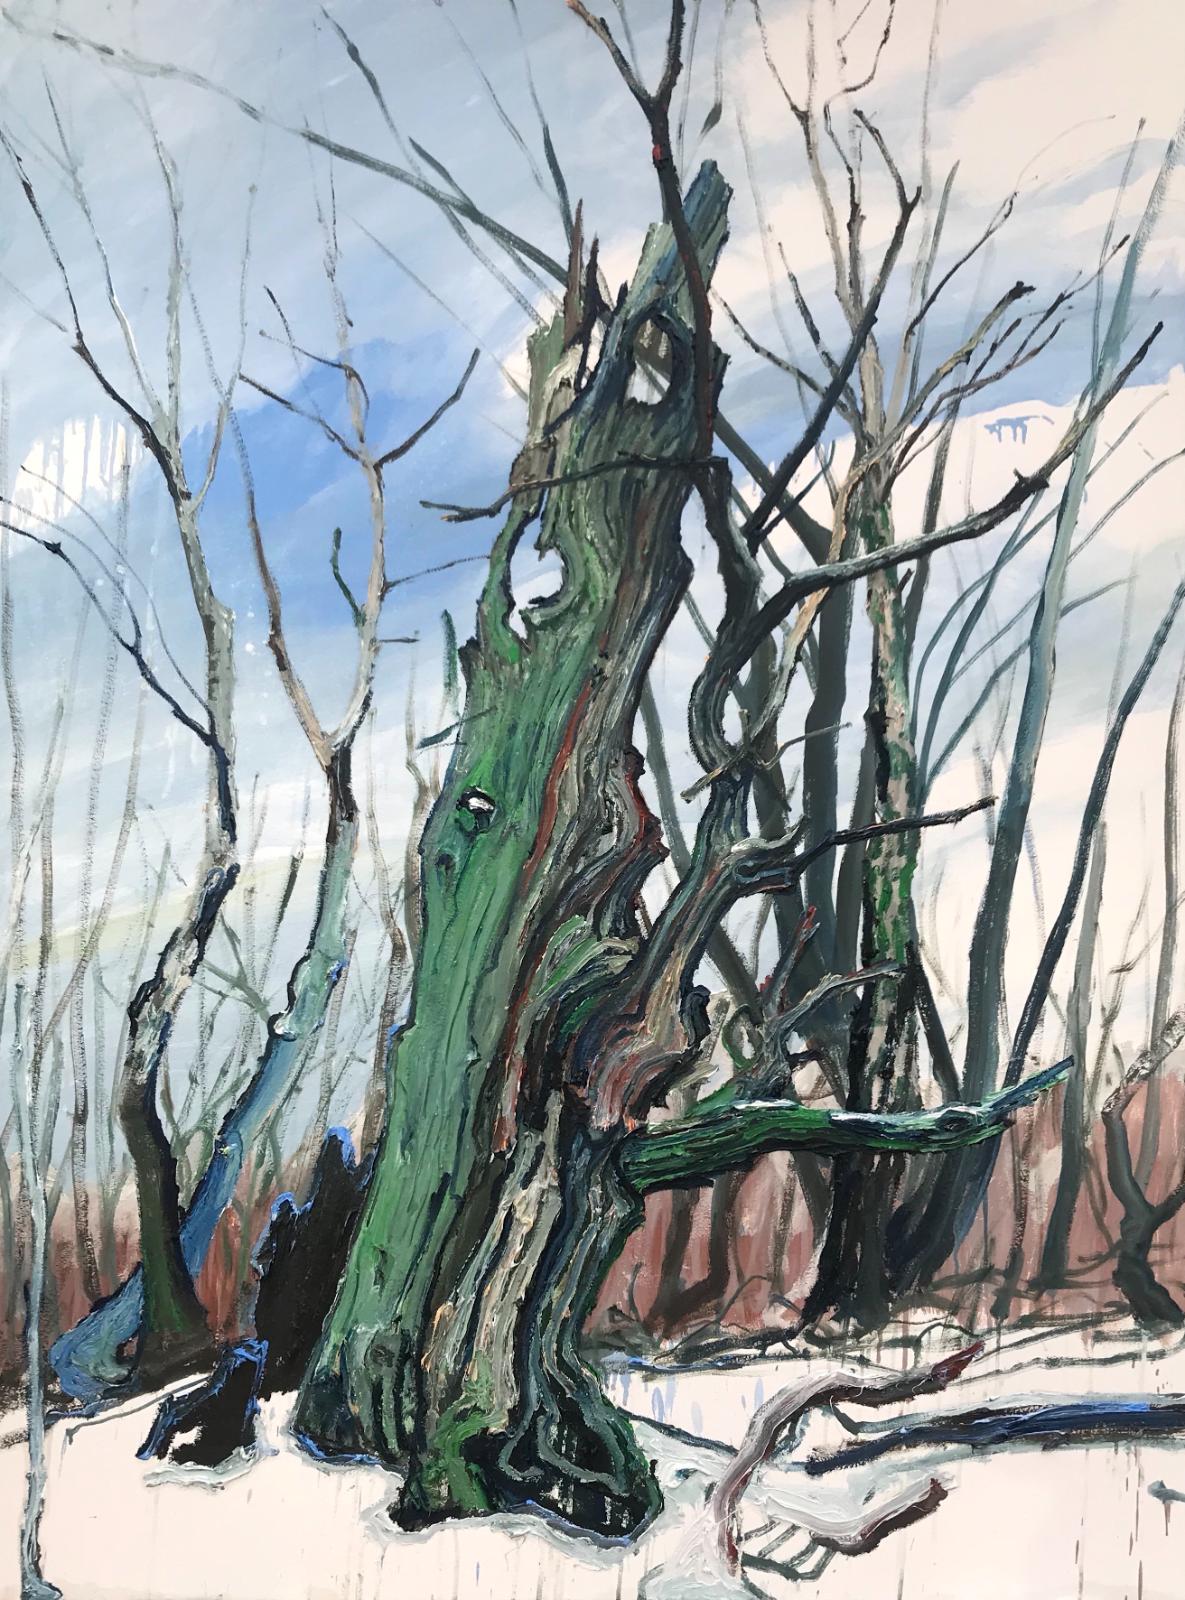 Helge Hommes, Nr. 5 Baumportrait, RHW ..., 2019, Öl auf Leinwand, 160 x 120 cm, Preis Anfrage